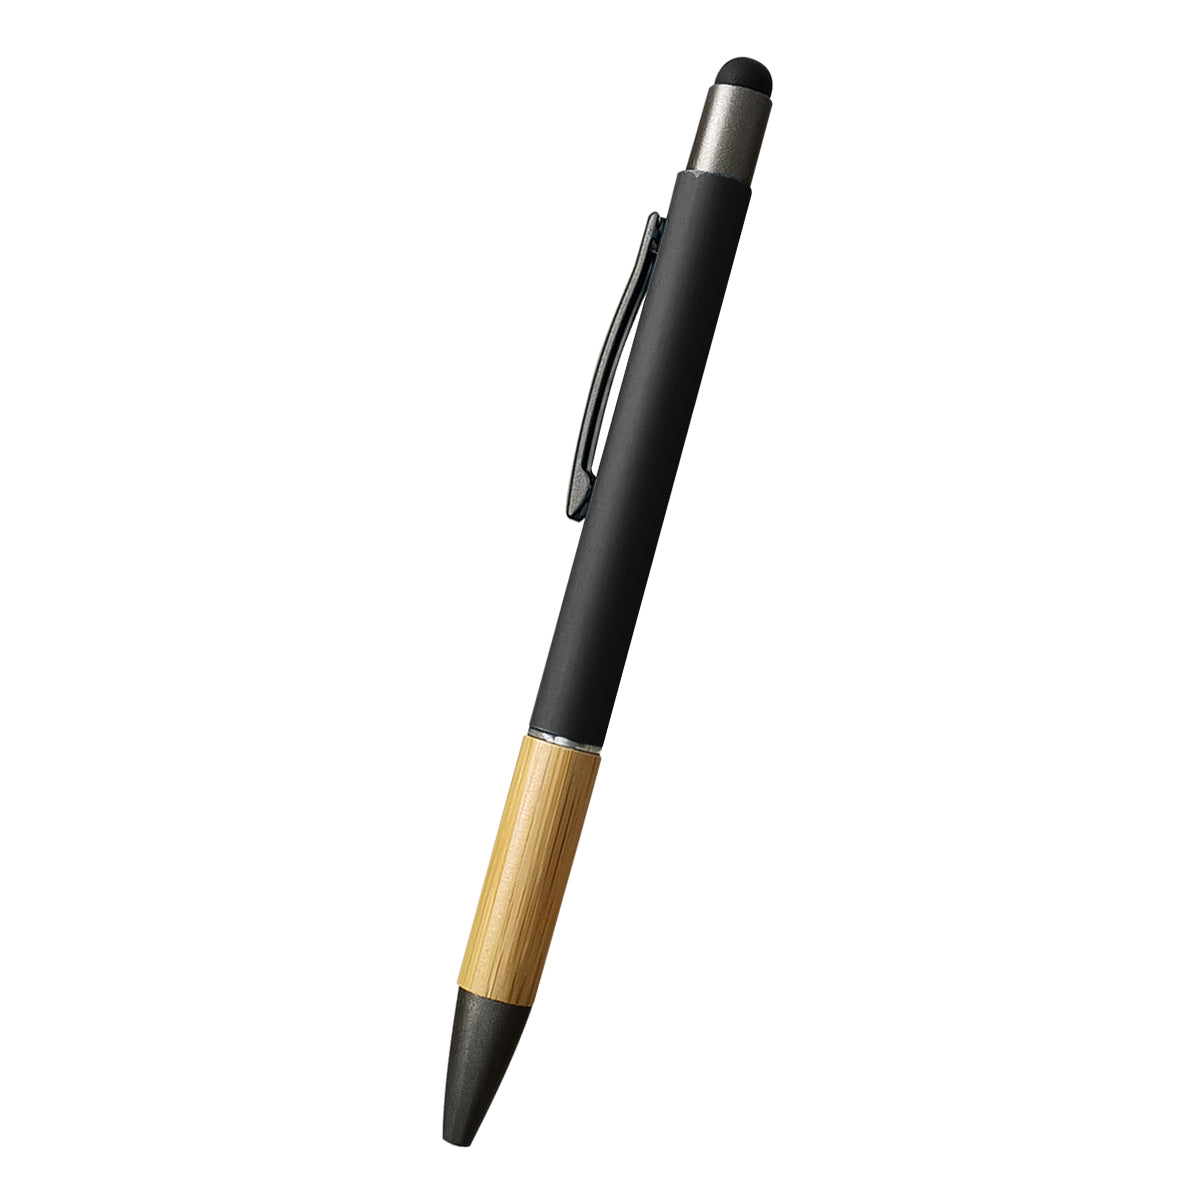 Customizable Aidan bamboo stylus pen in black.